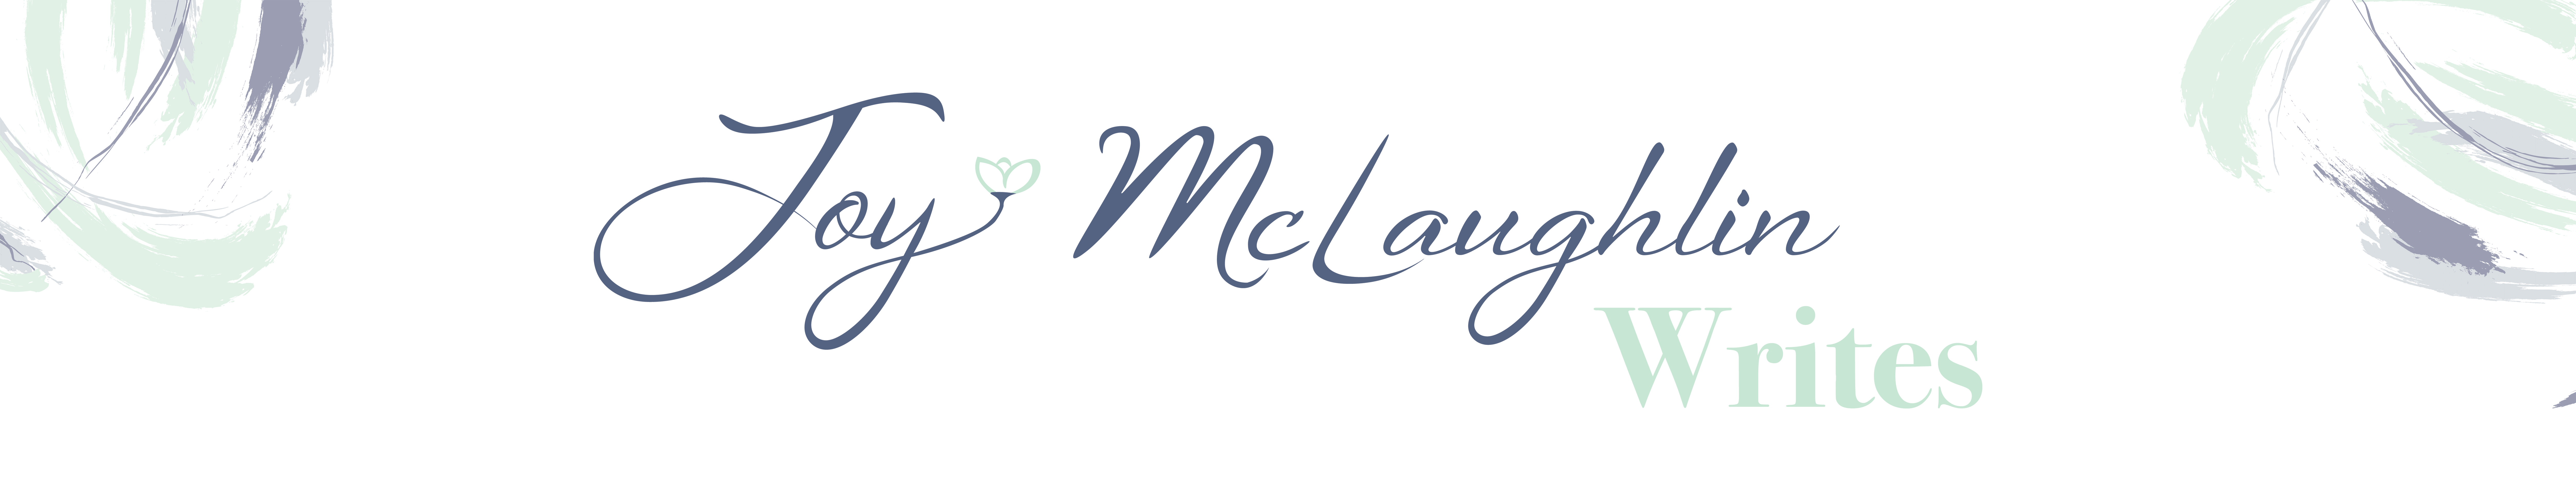 Joy McLaughlin_header background_logo